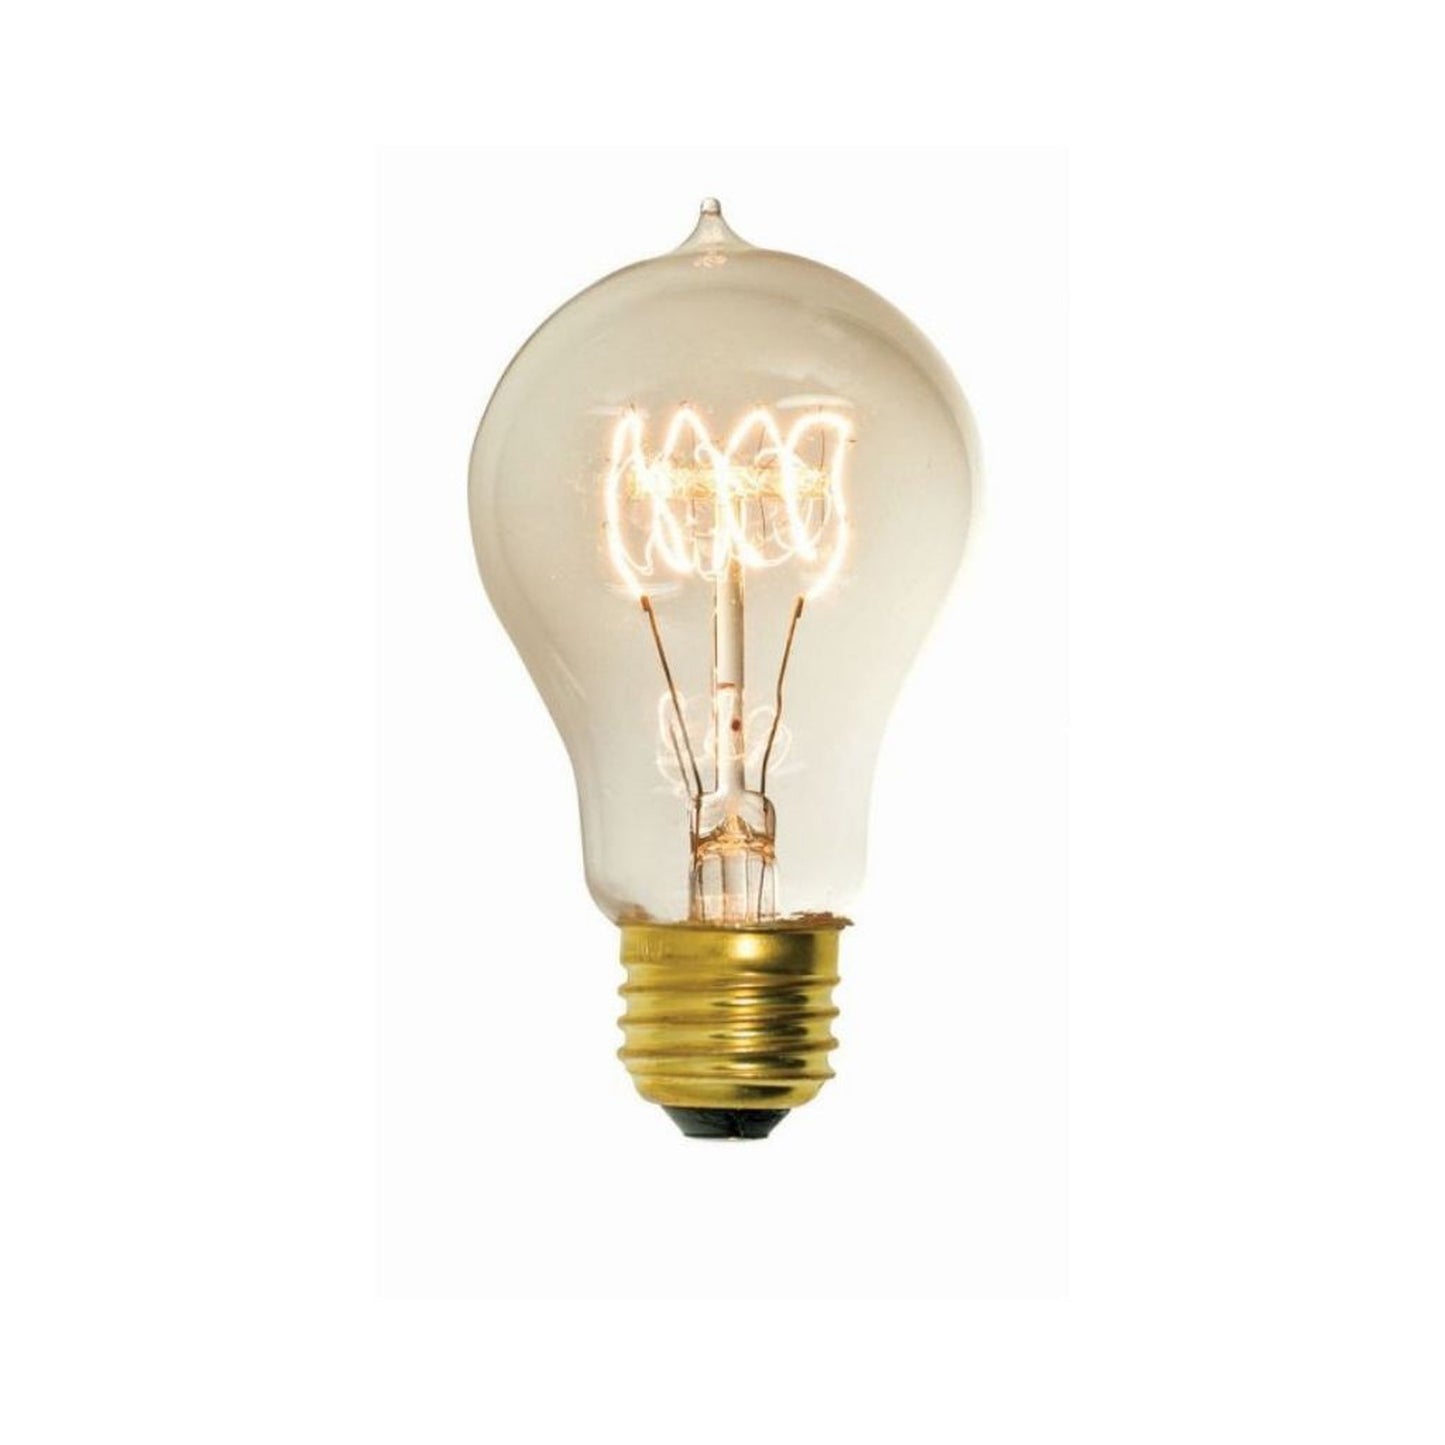 Craftmade 60-Watt A19 With Tip, Clear Amber Finish, E26 Medium Base, 4" M.O.L., 2200K Warm White Incandescent Light Bulb